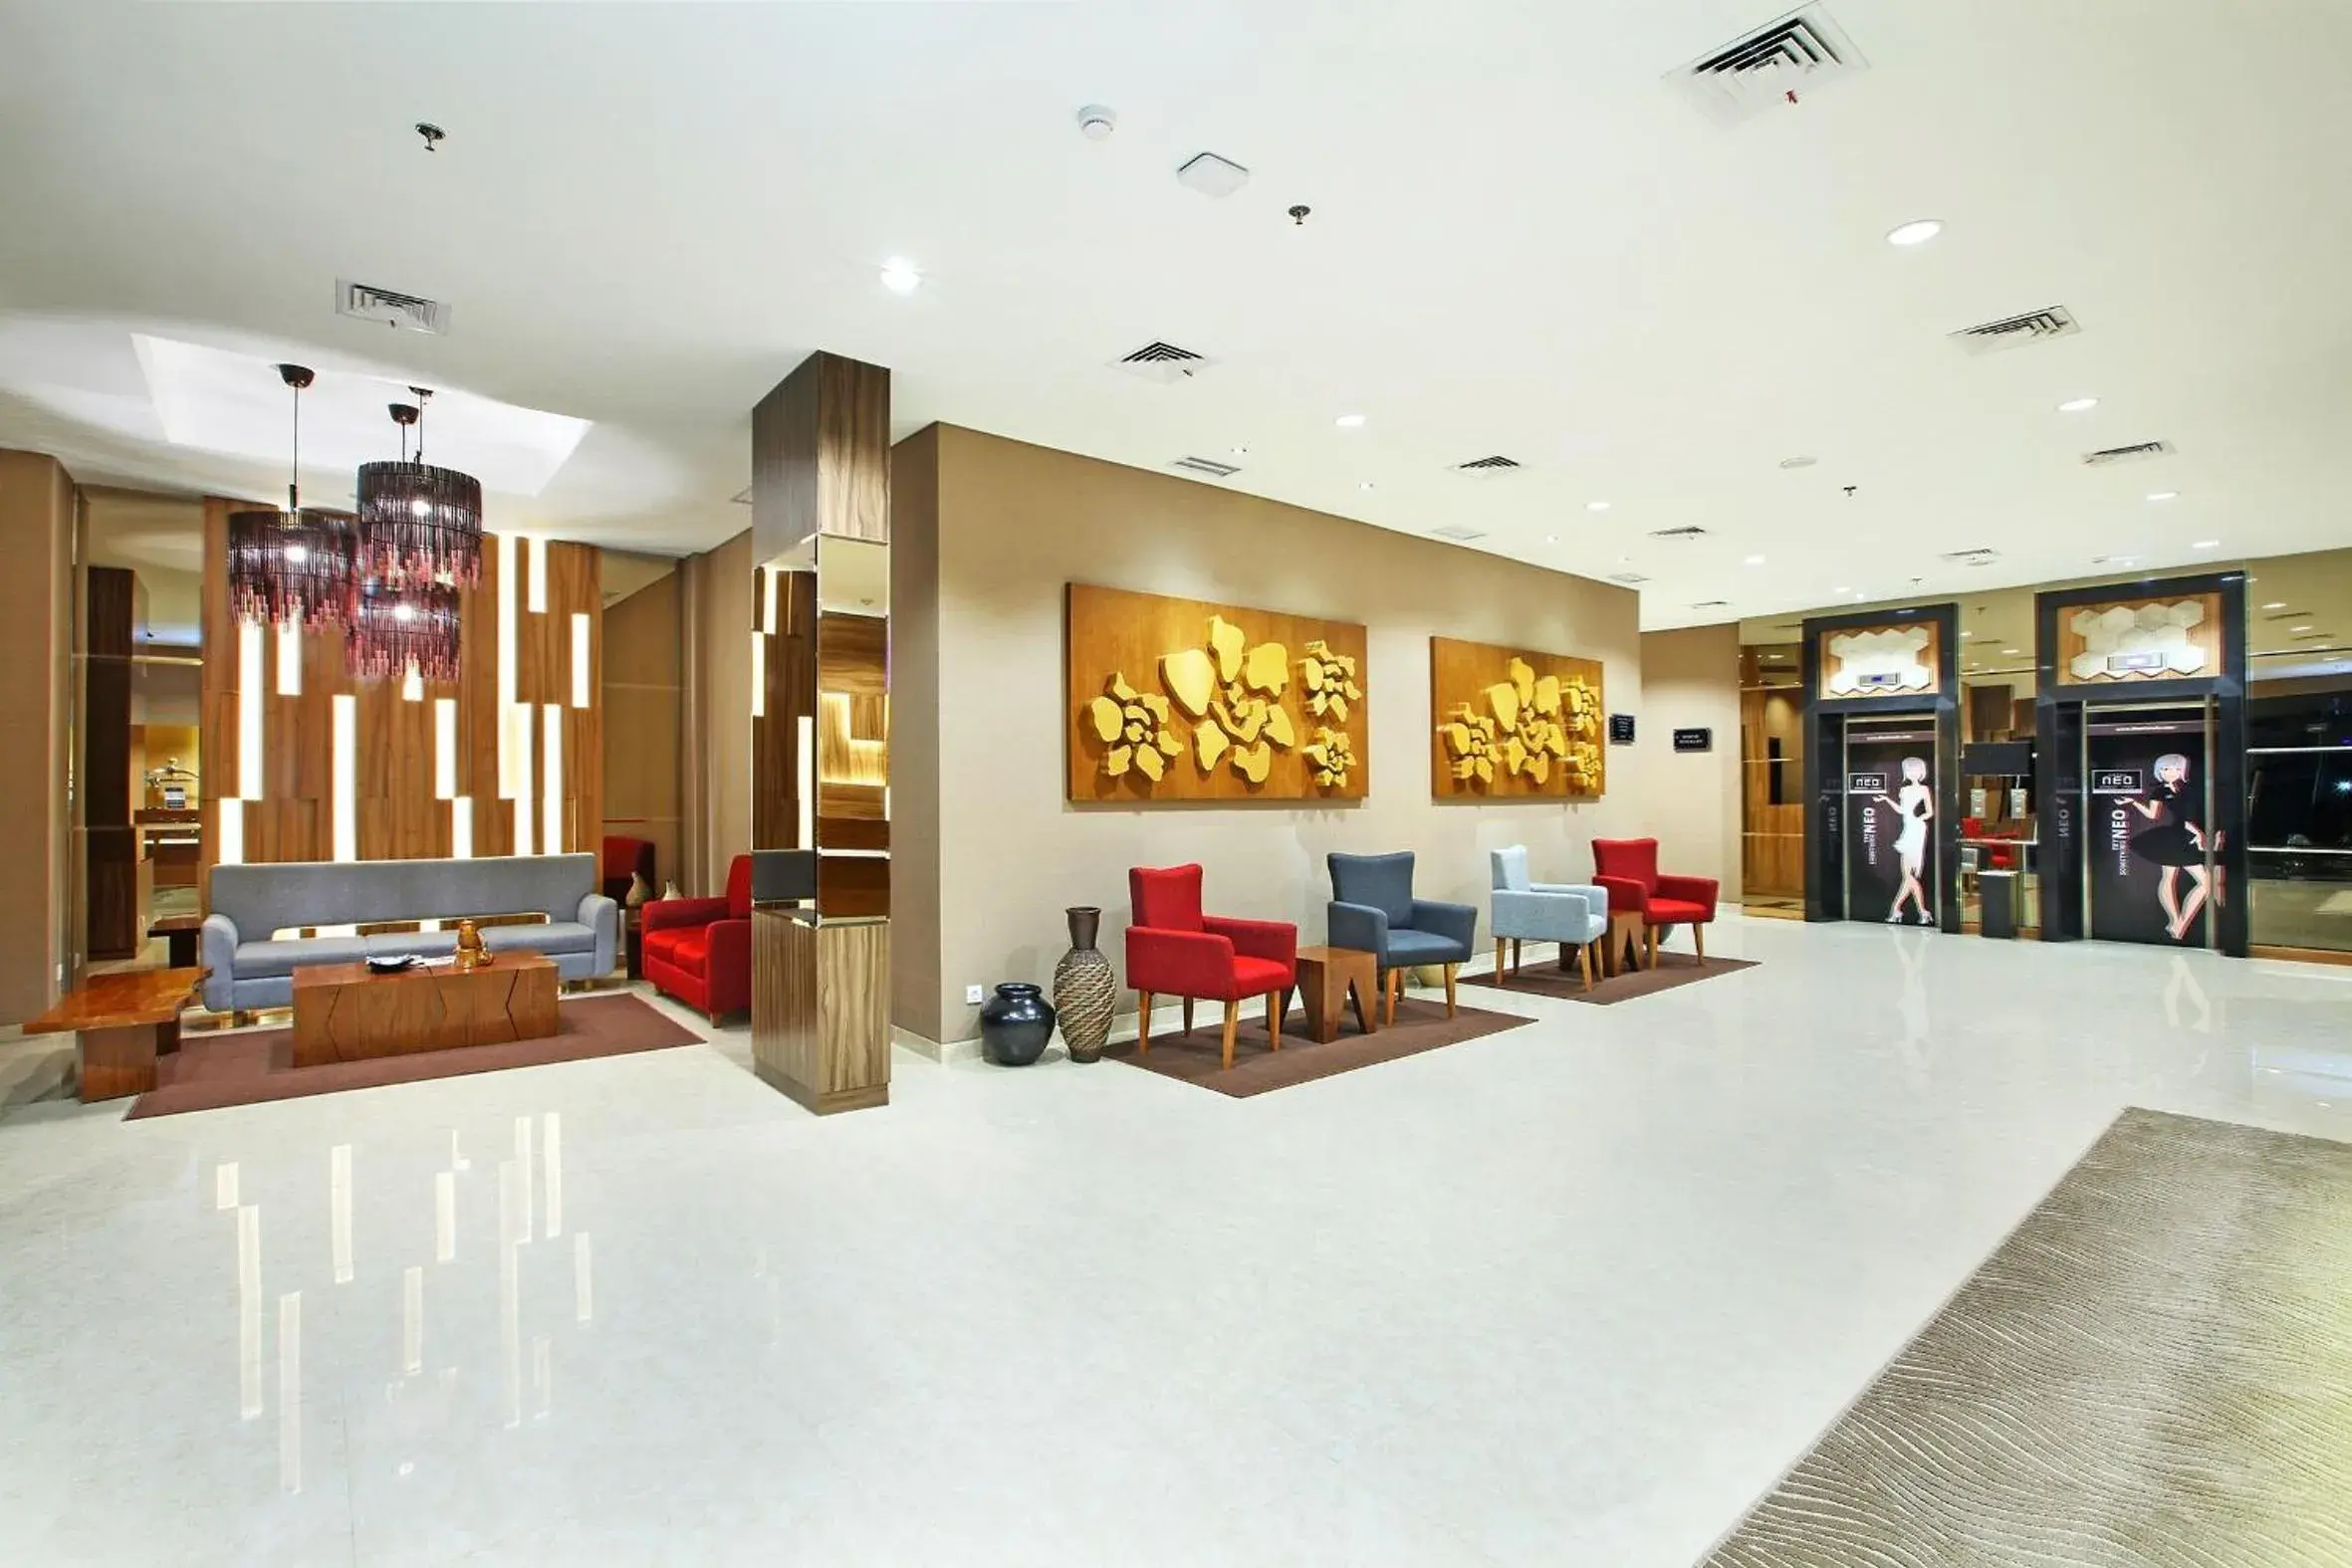 Lobby or reception in Neo Samadikun Cirebon Hotel